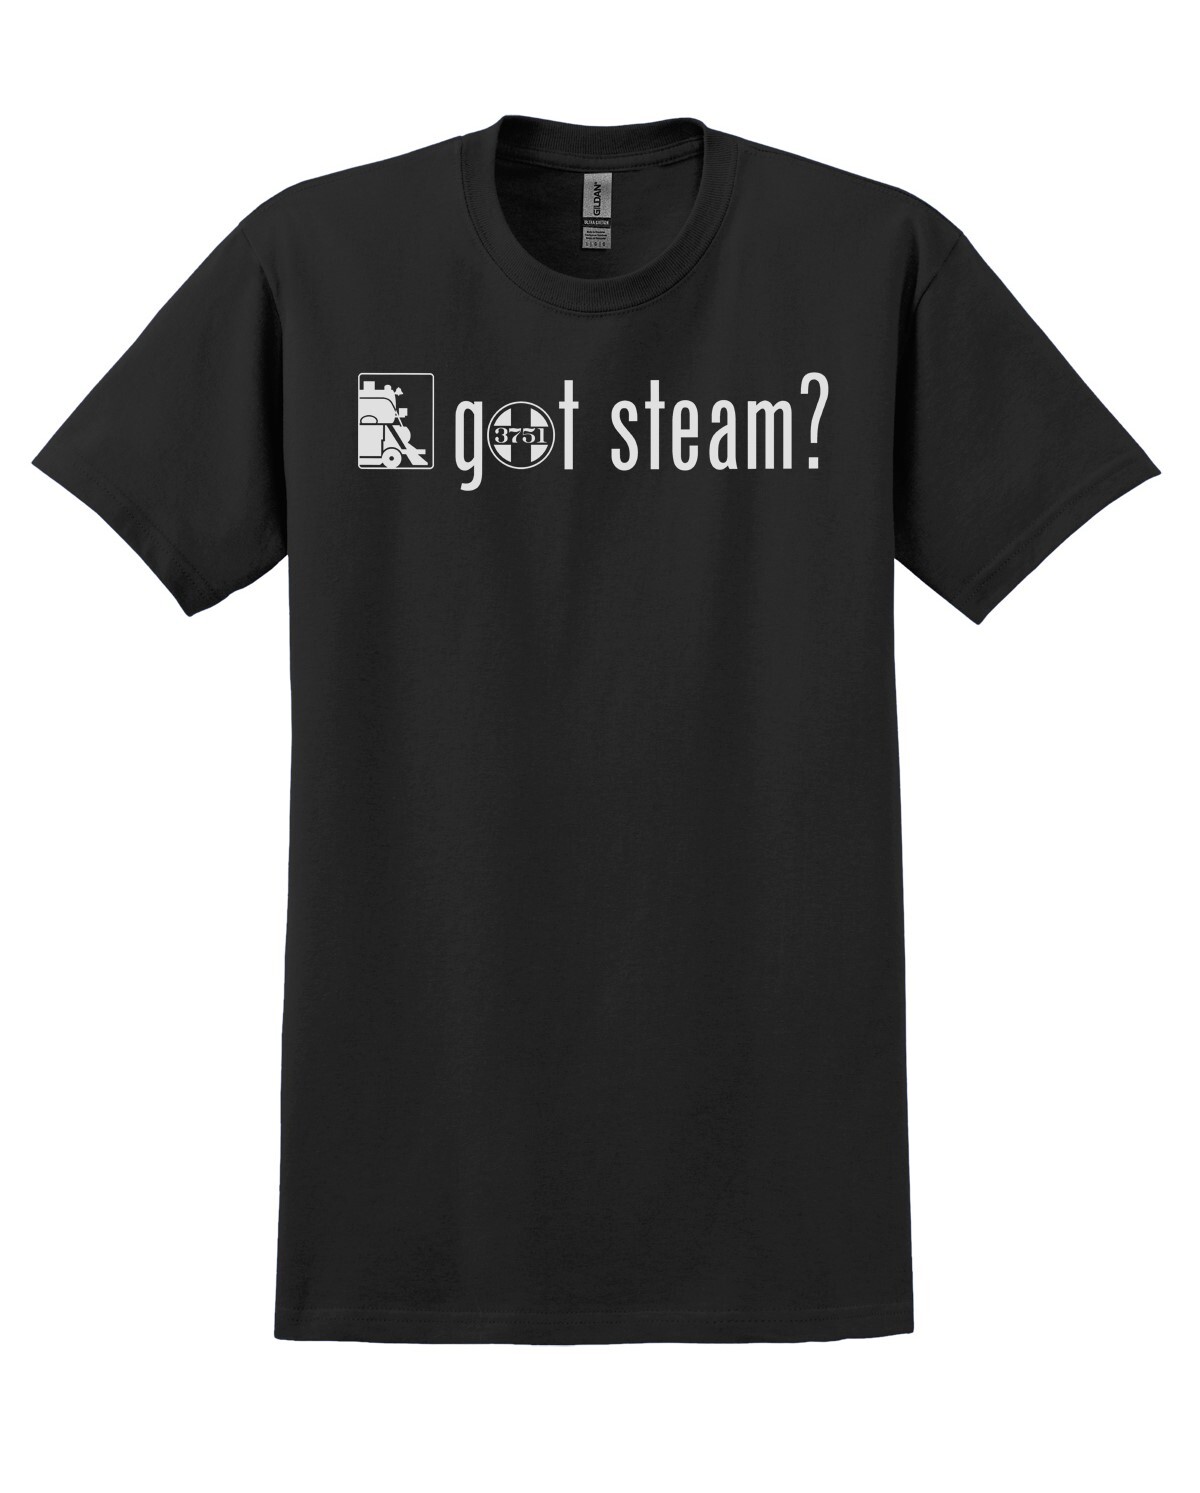 NEW!!! "Got Steam?" - (Black) - Medium